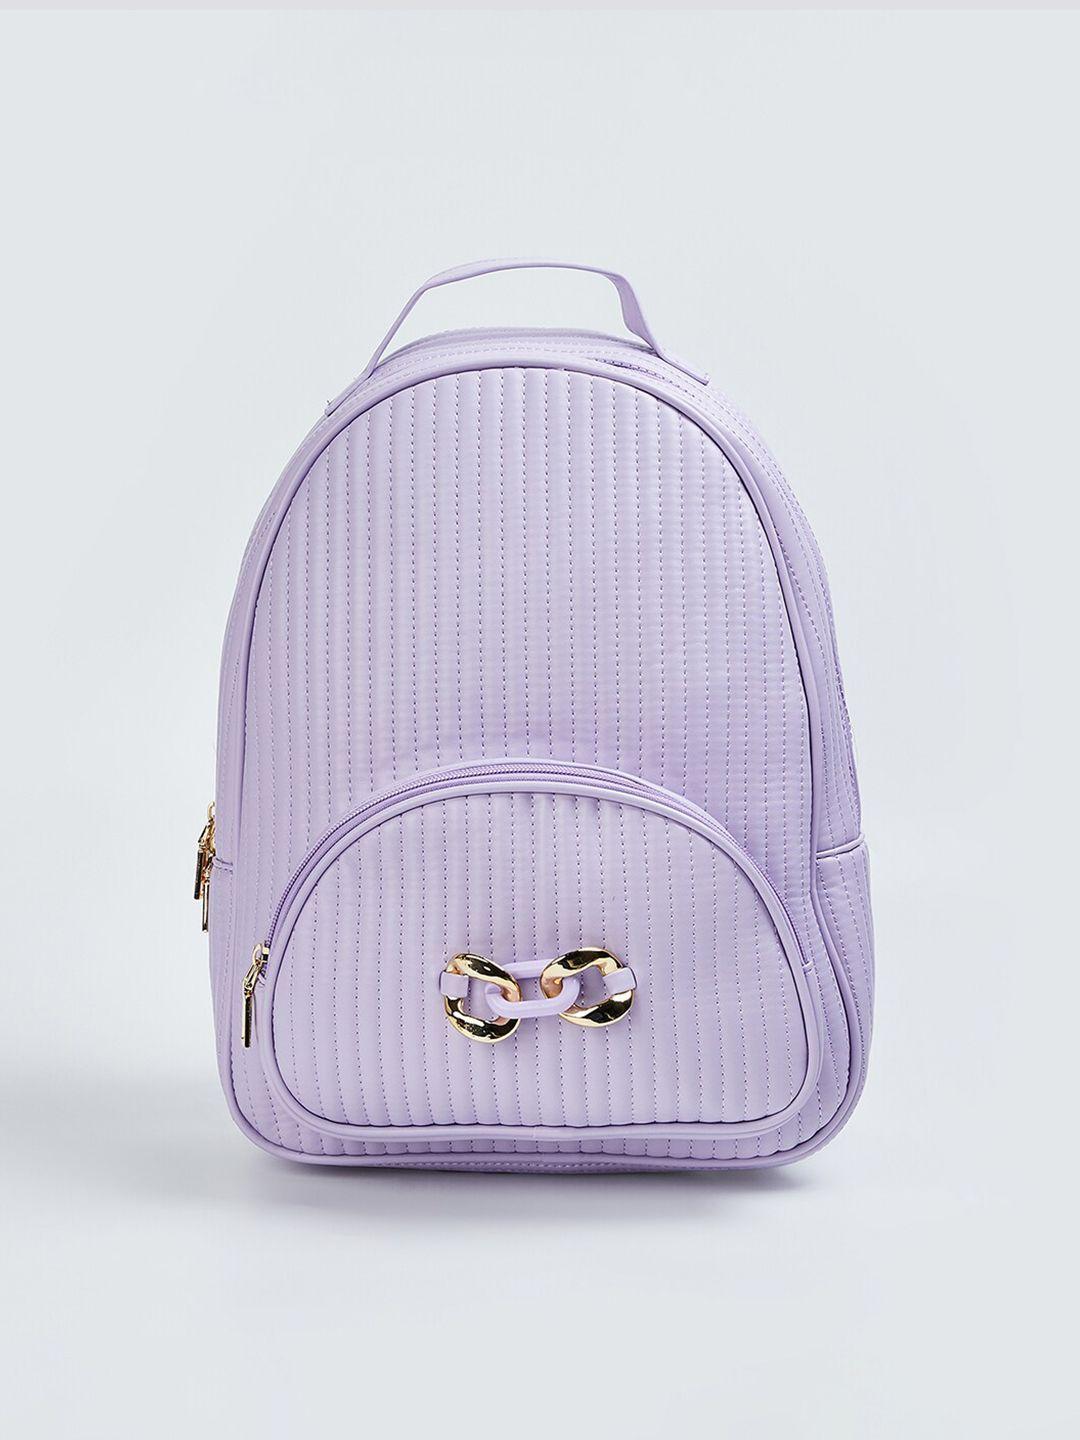 max women purple backpack